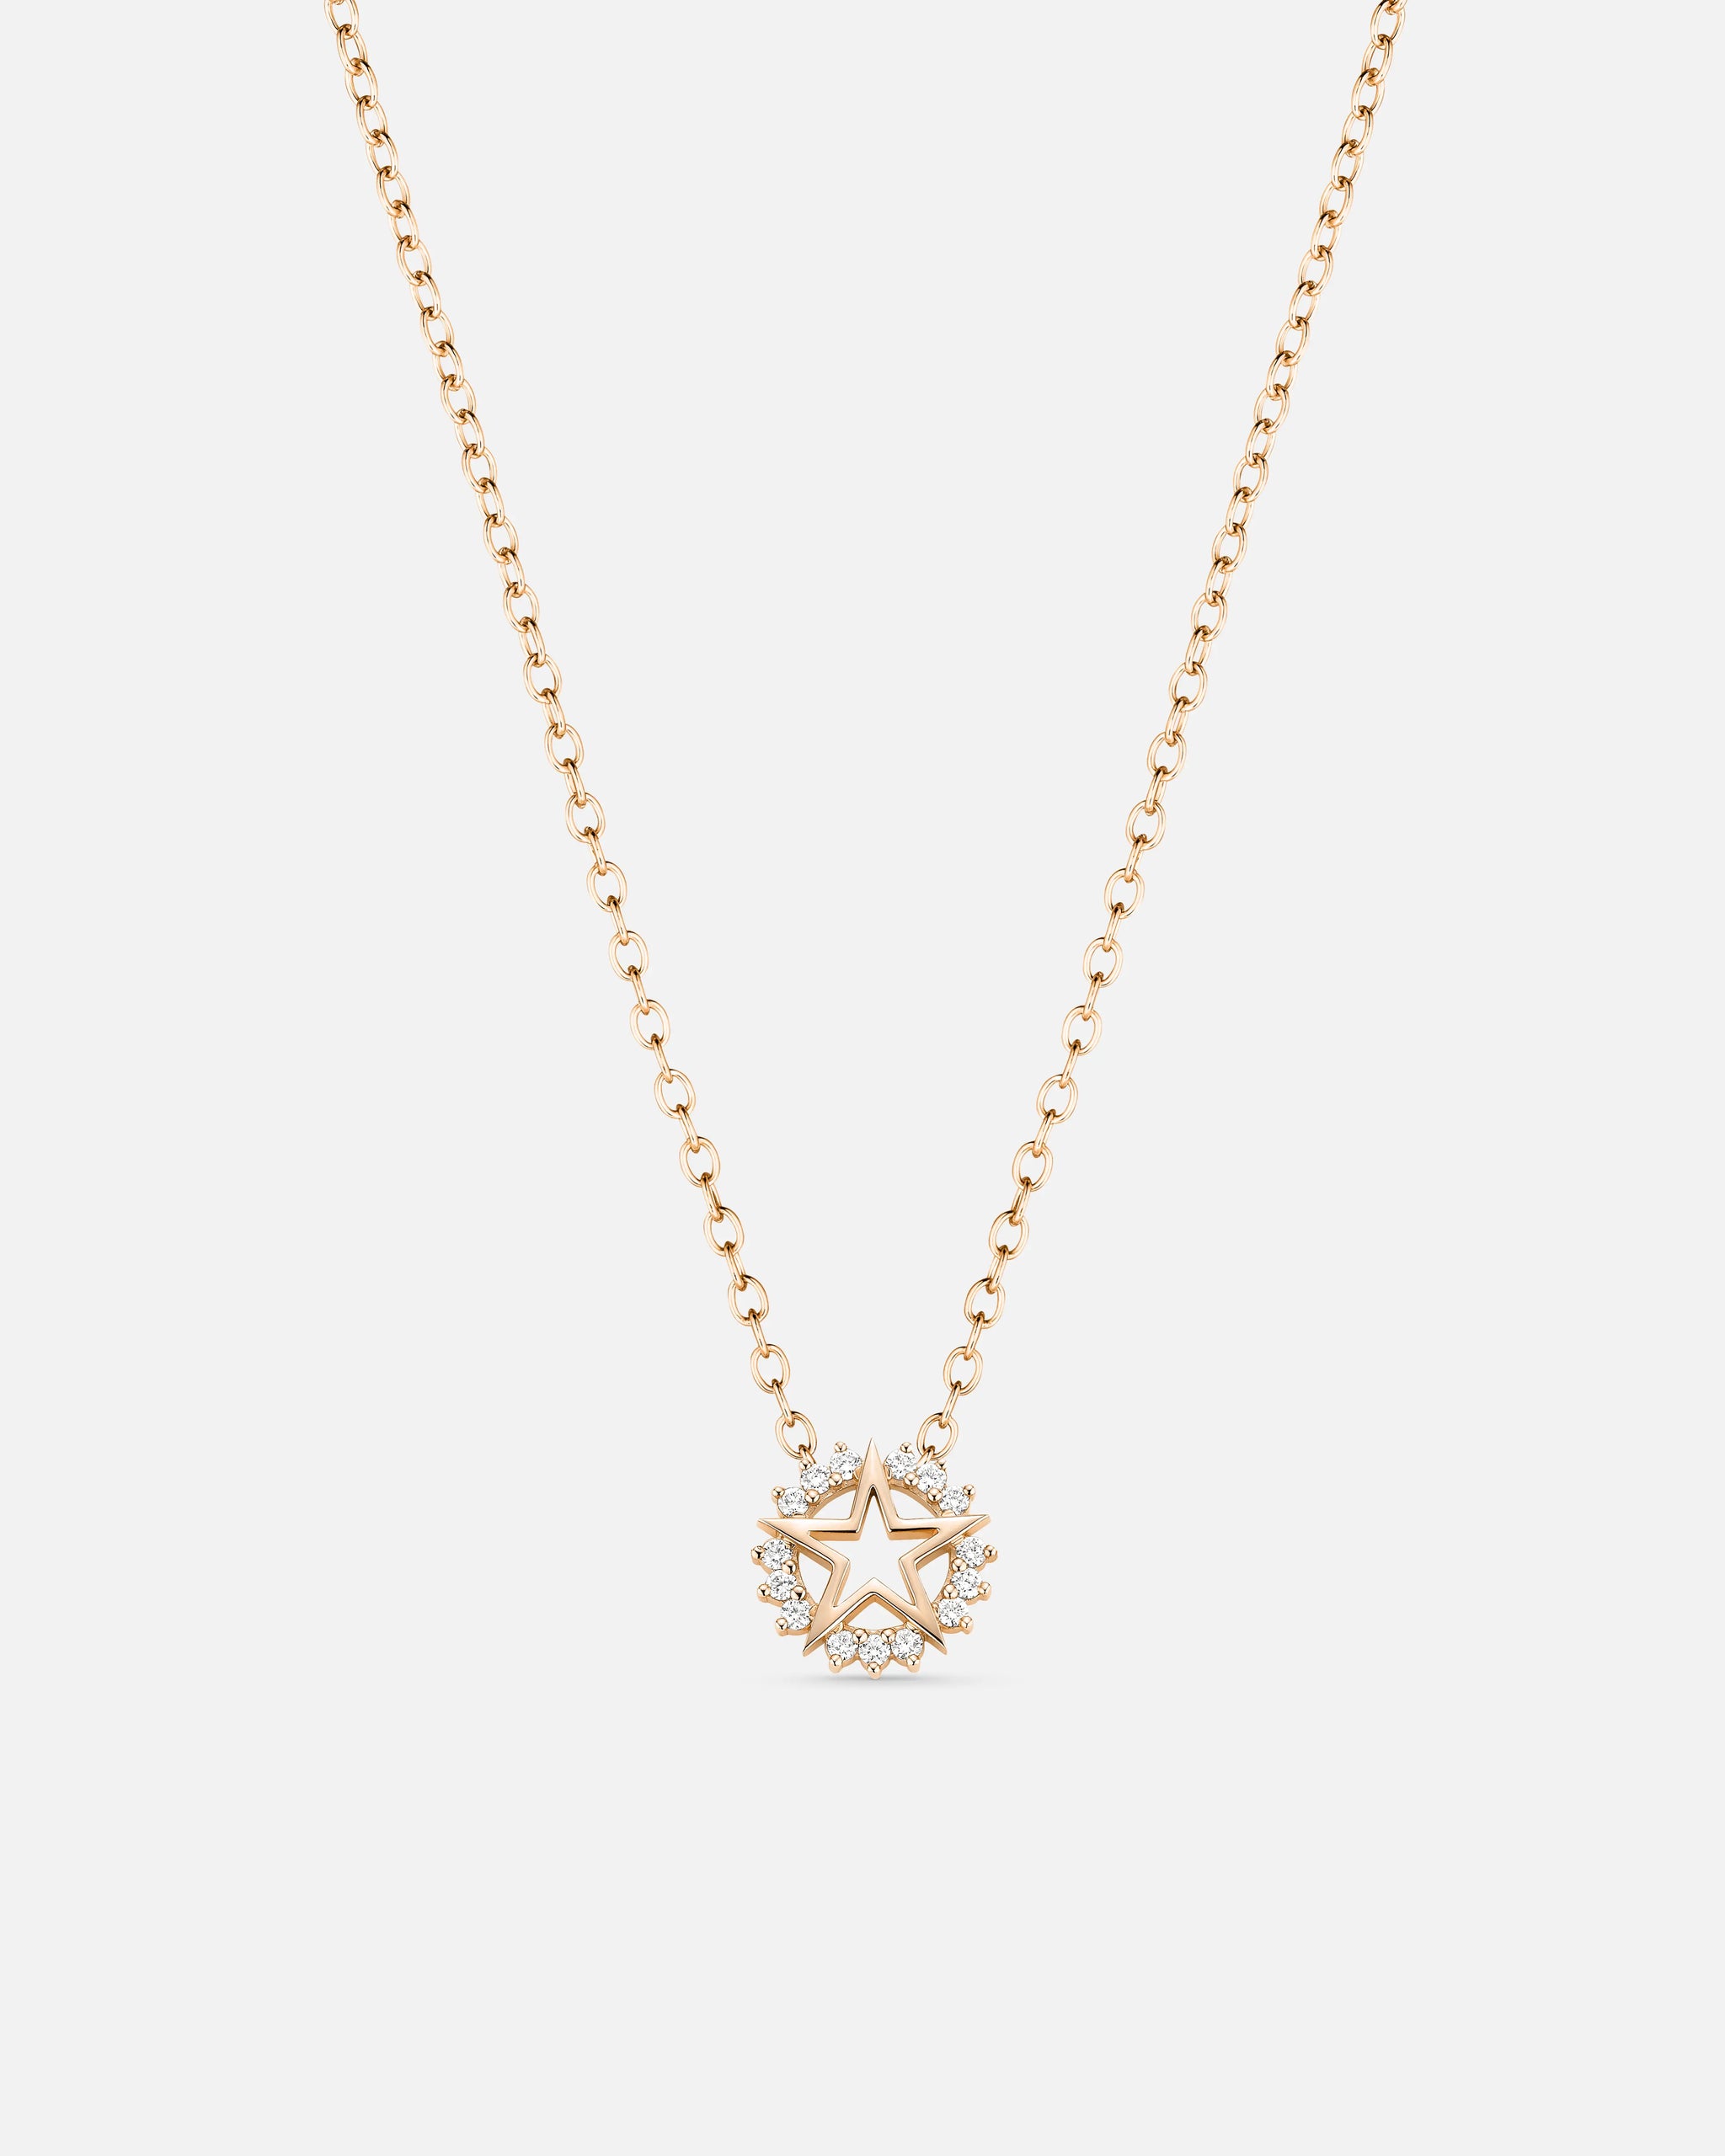 Medium Star Pendant in Rose Gold - 1 - Nouvel Heritage